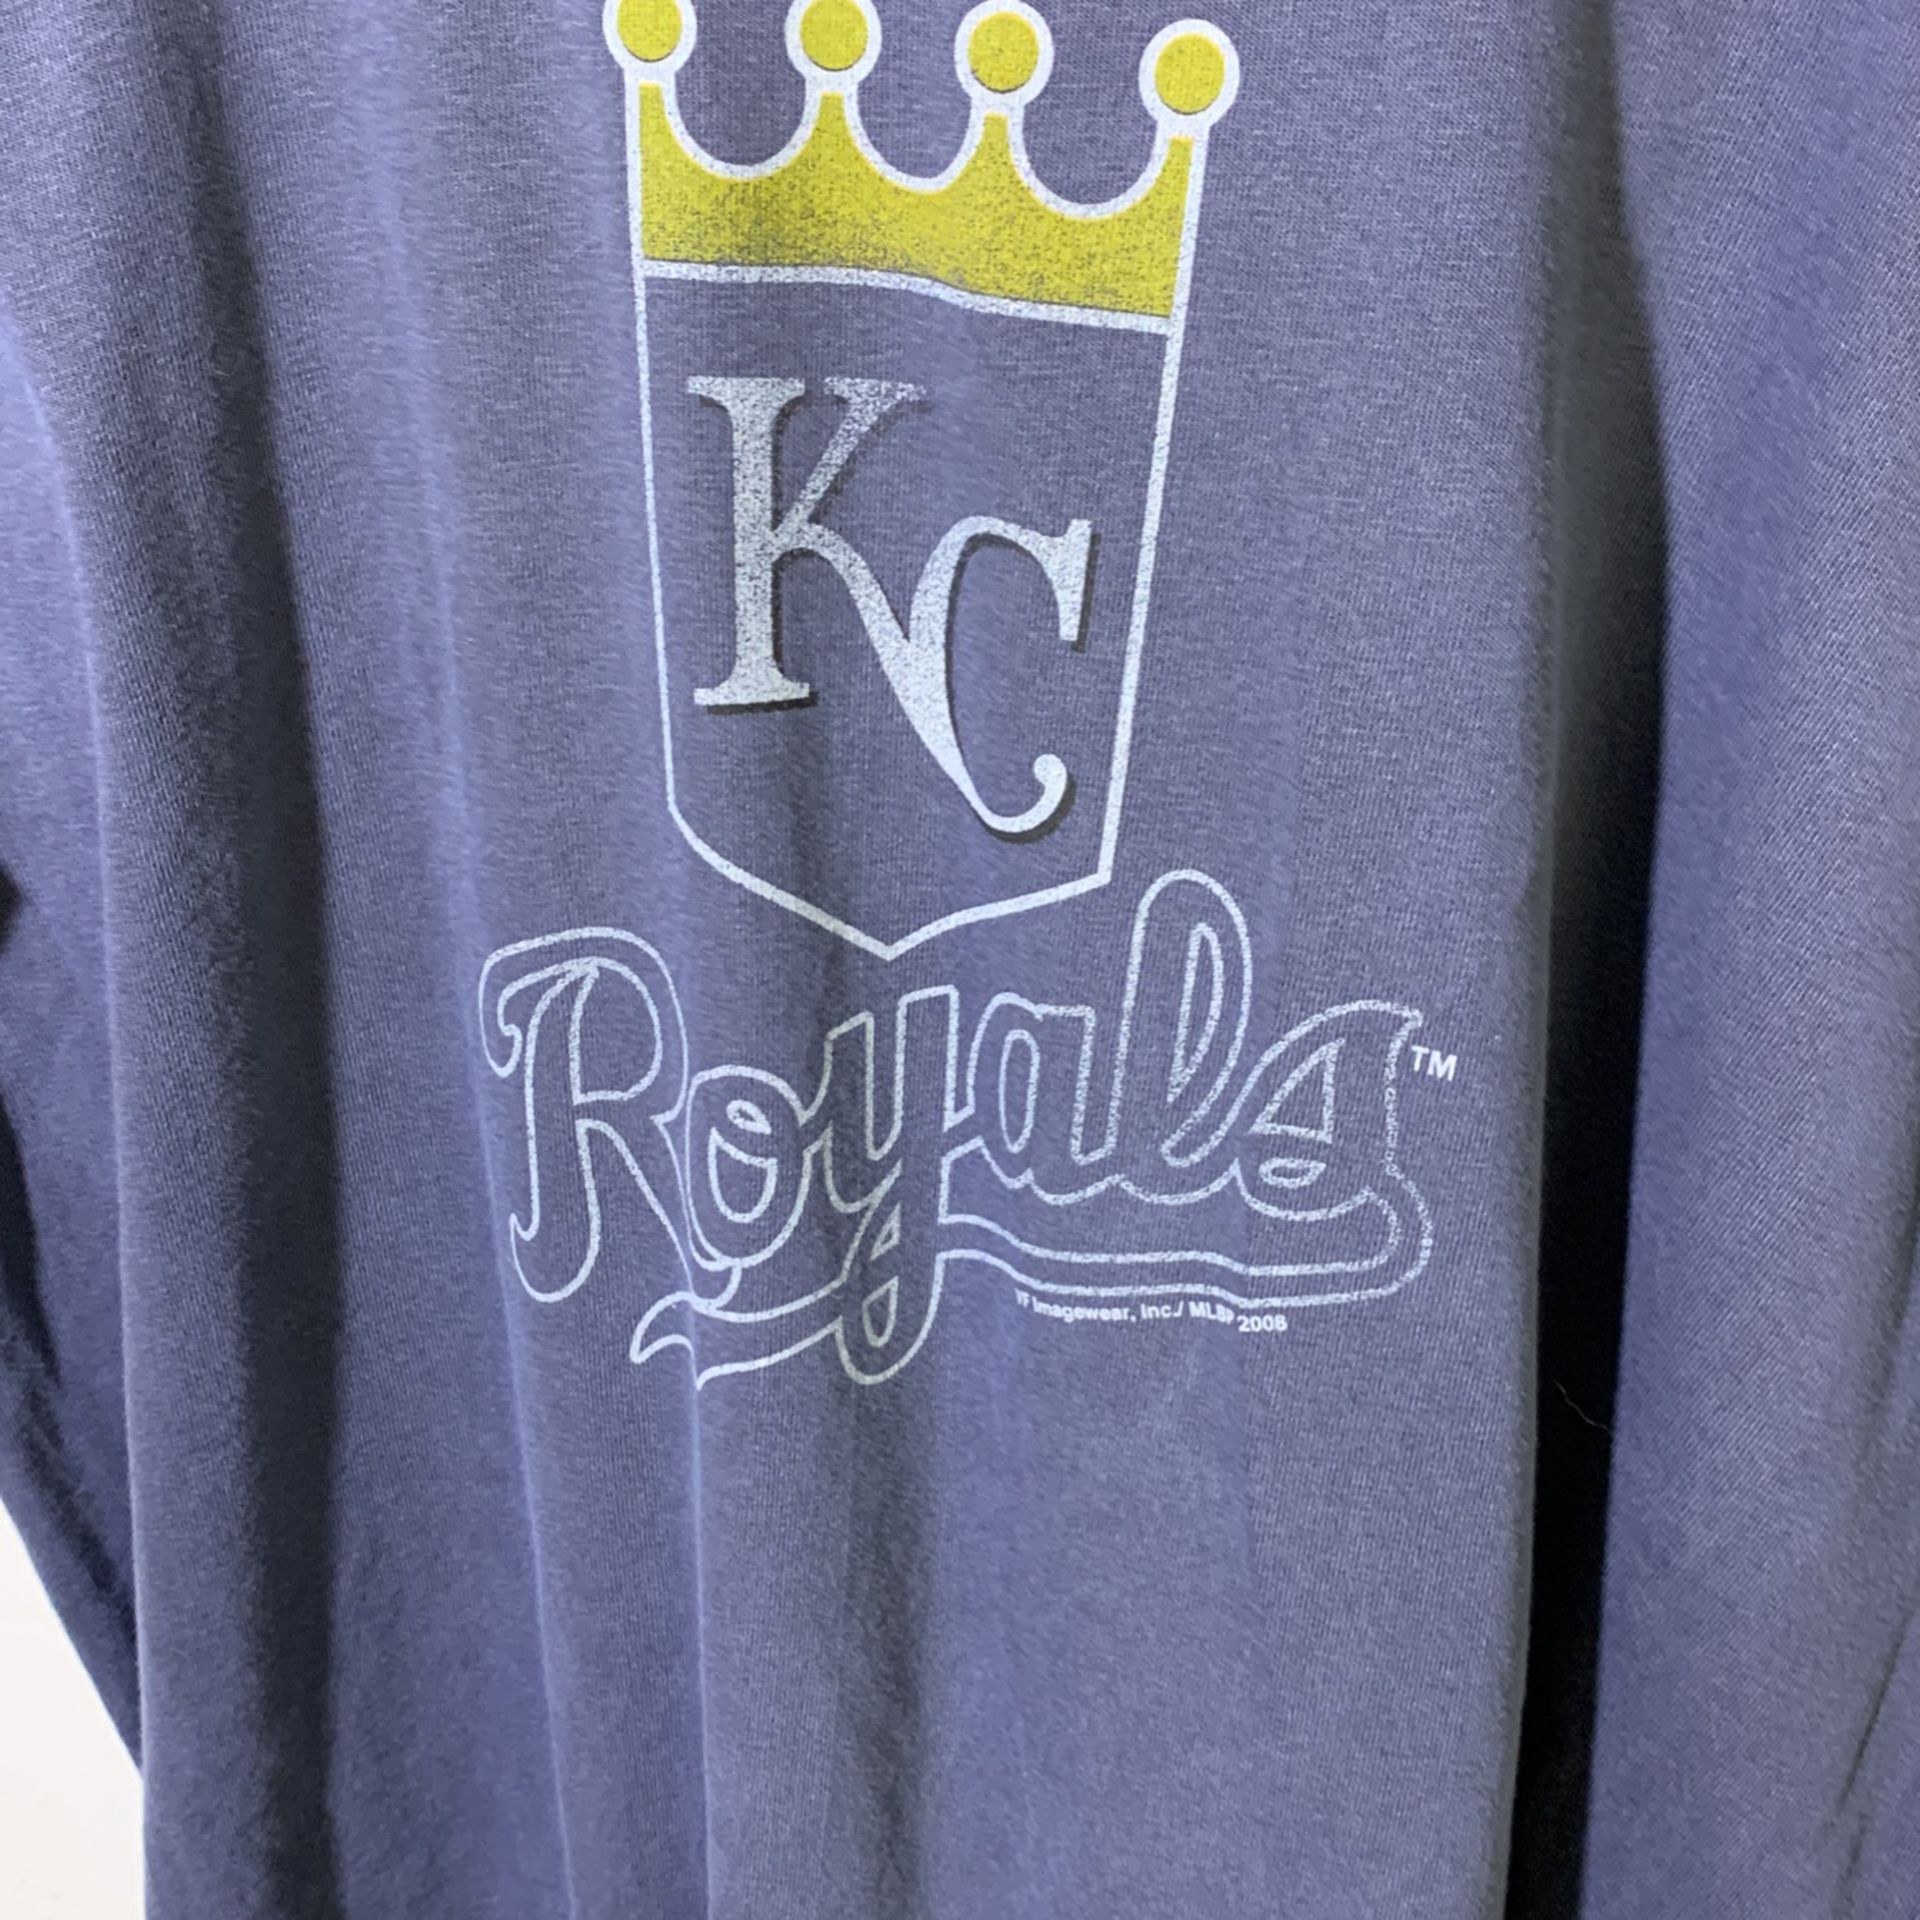 Kansas City Royals Vintage Tshirt for Sale in Wichita, KS - OfferUp